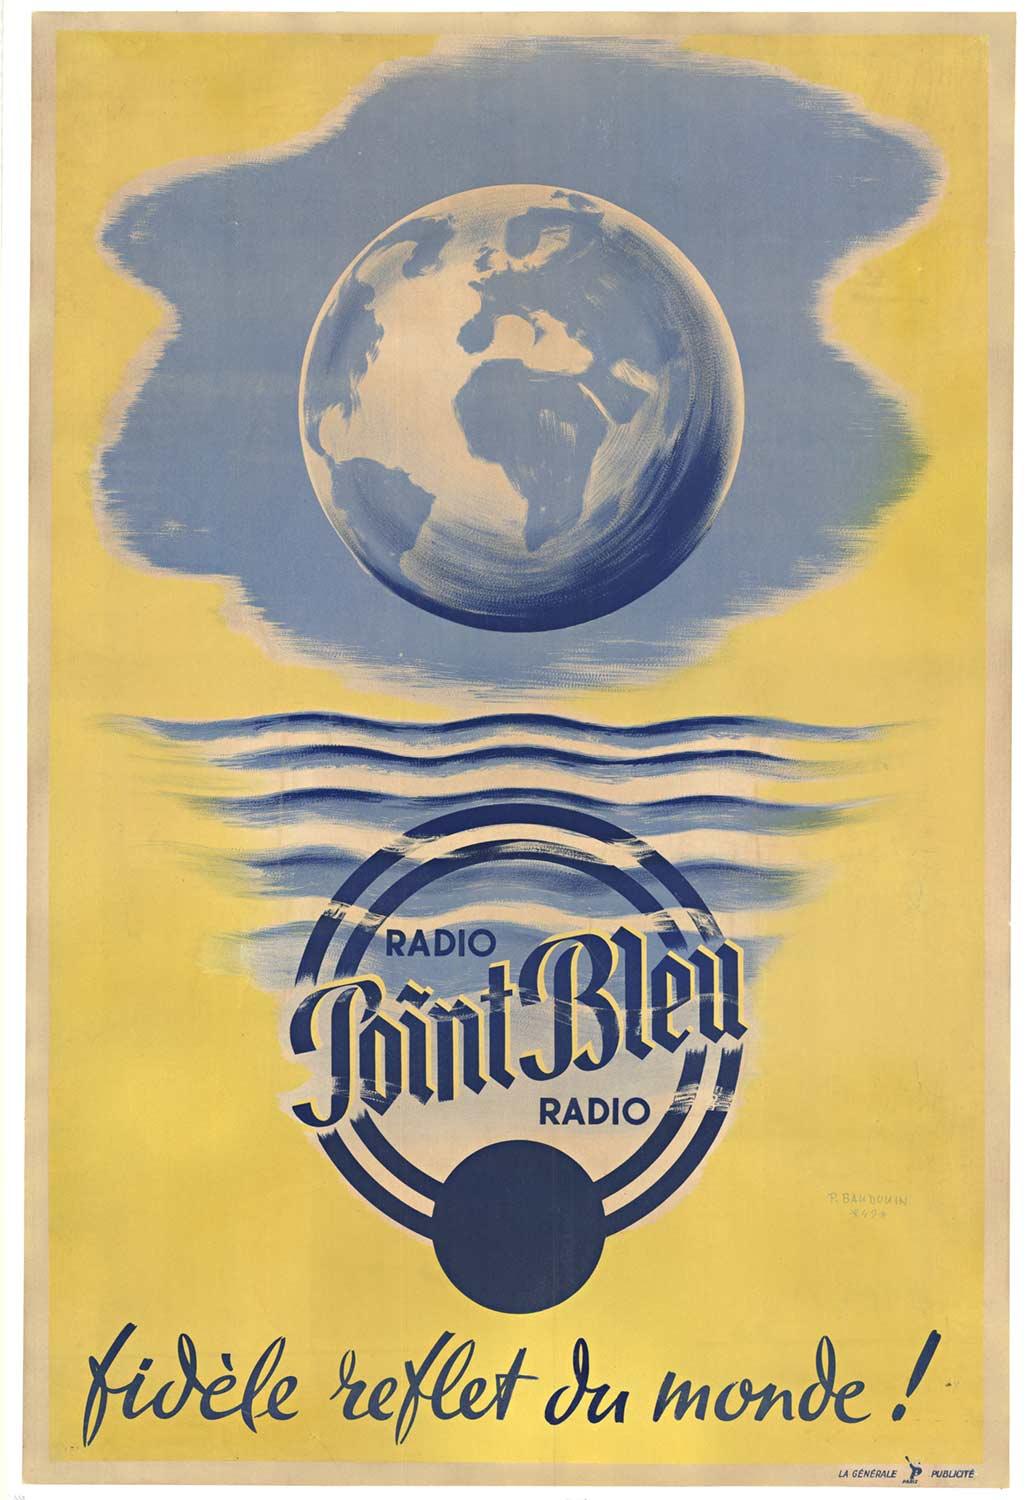 Original "Point Bleu Radio" vintage poster, faithful reflection of the world